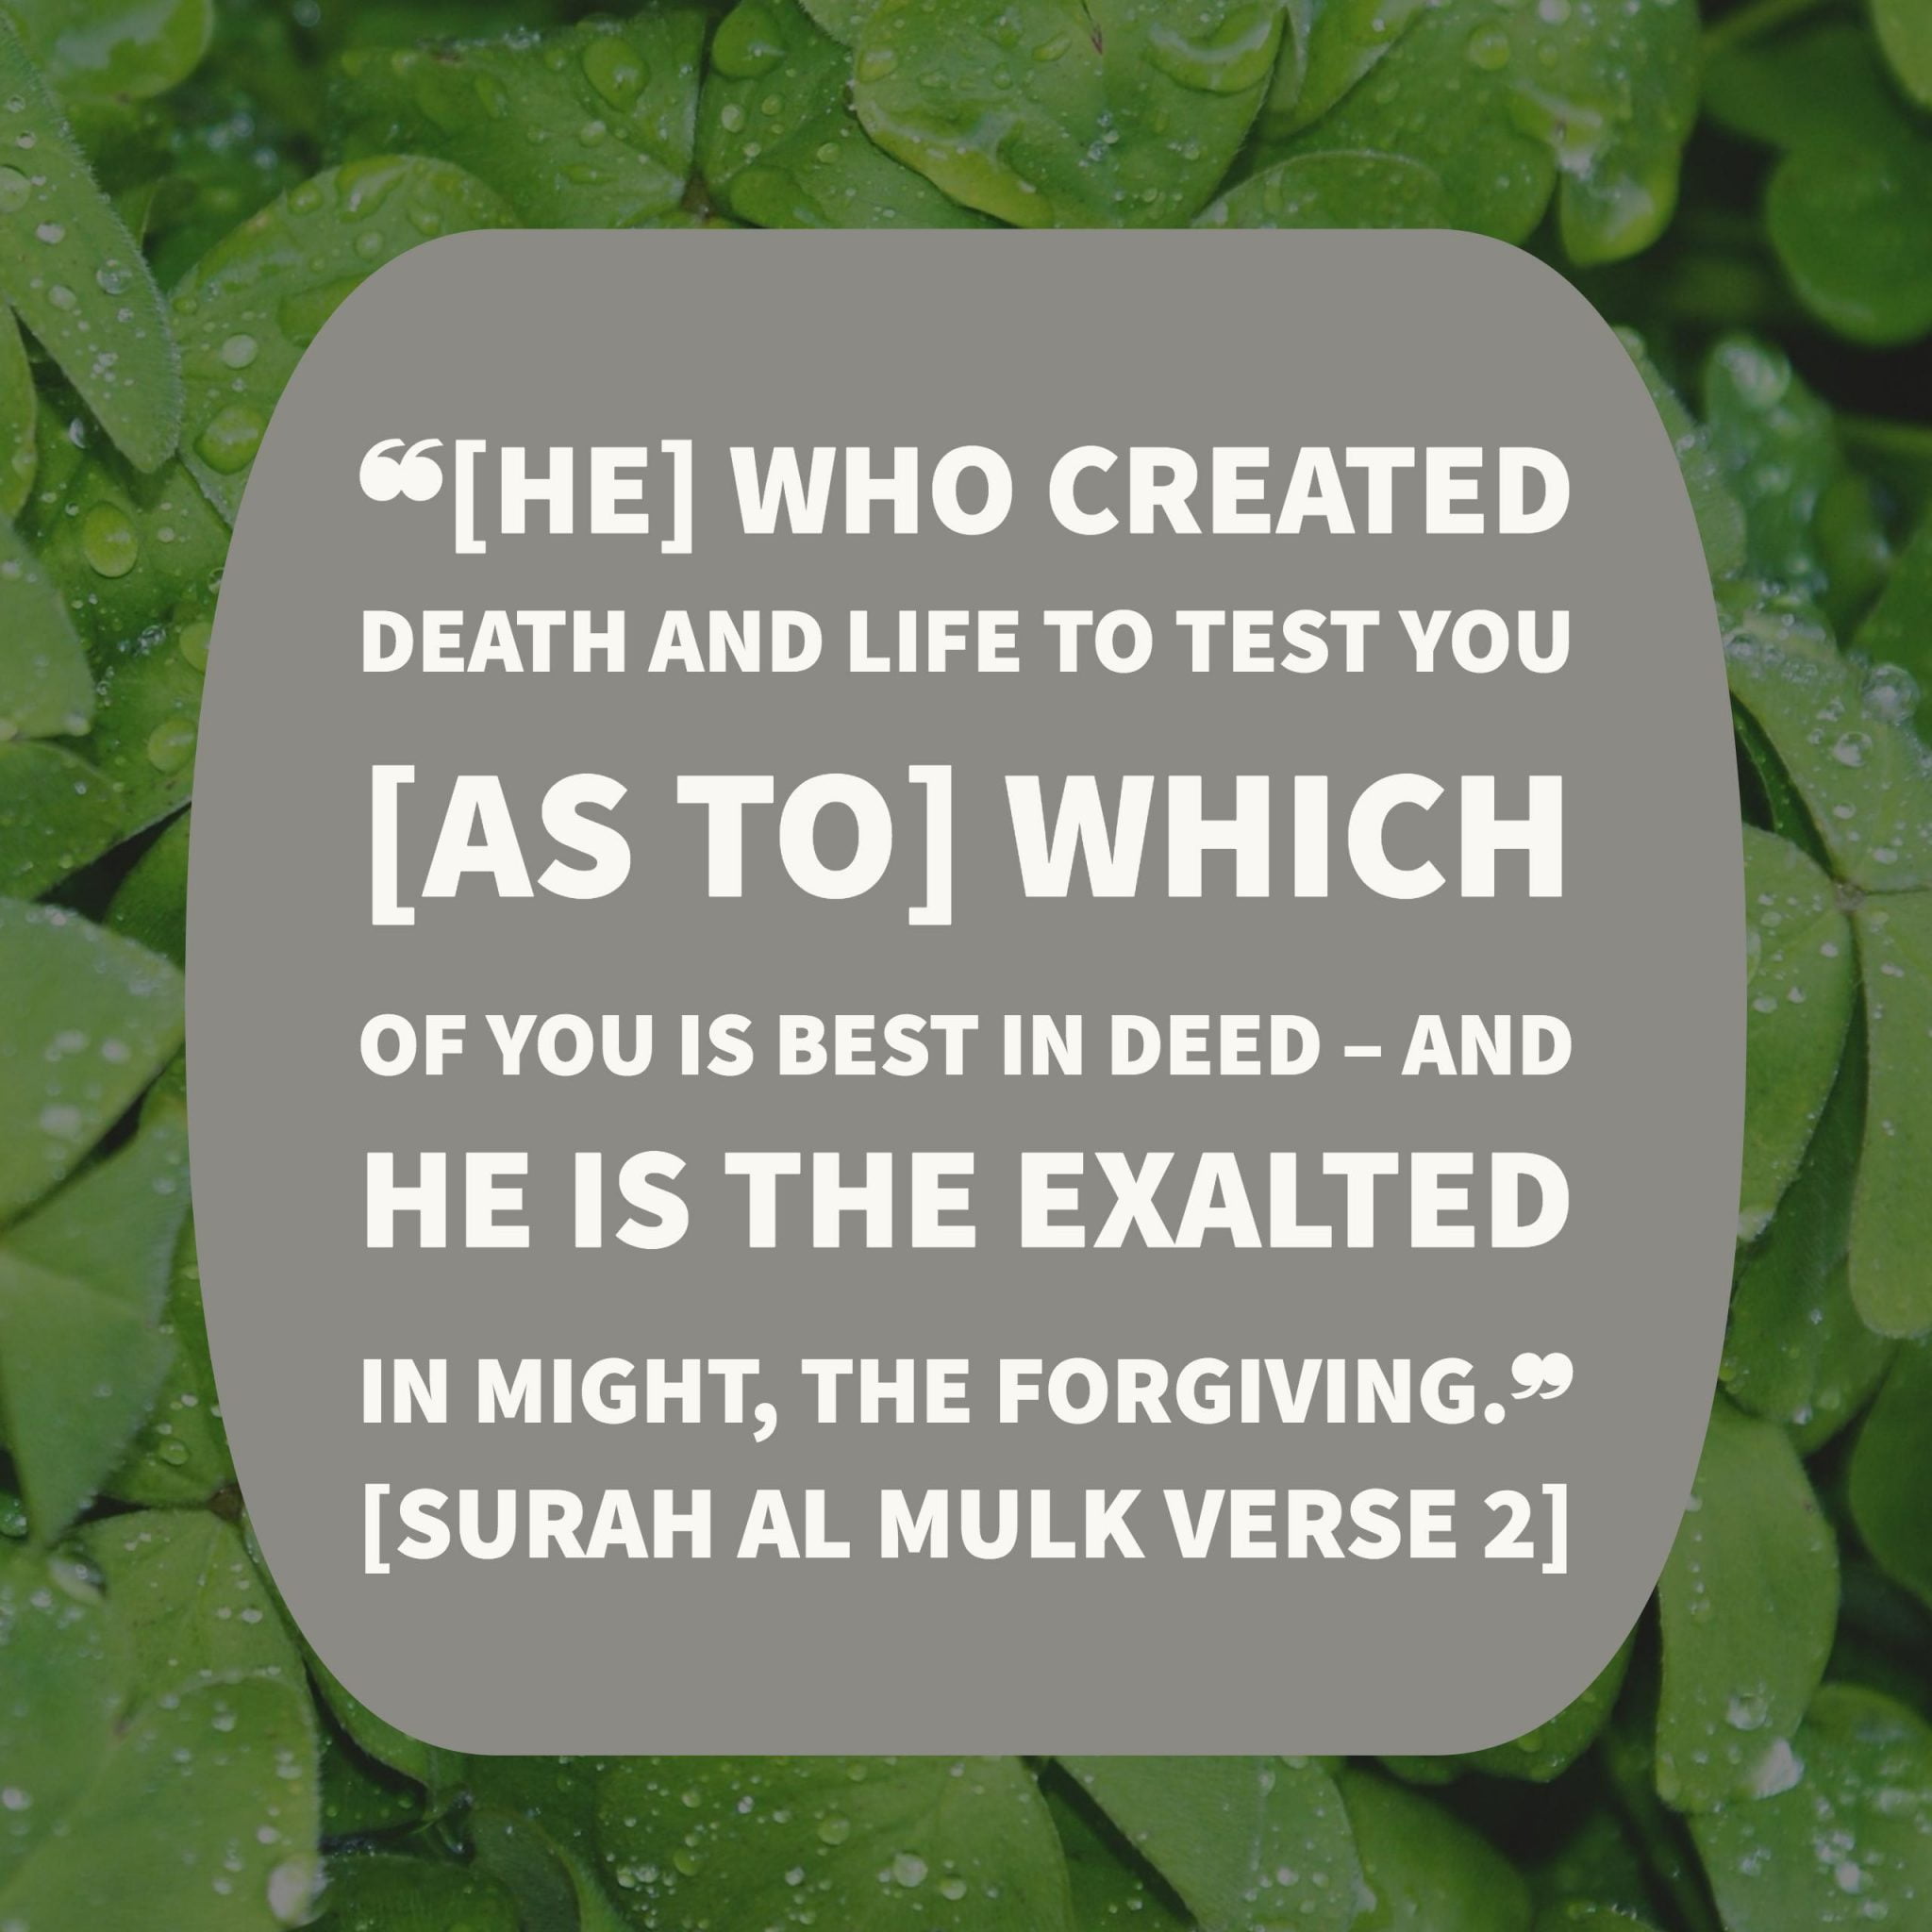 surah mulk verse 2 english translation